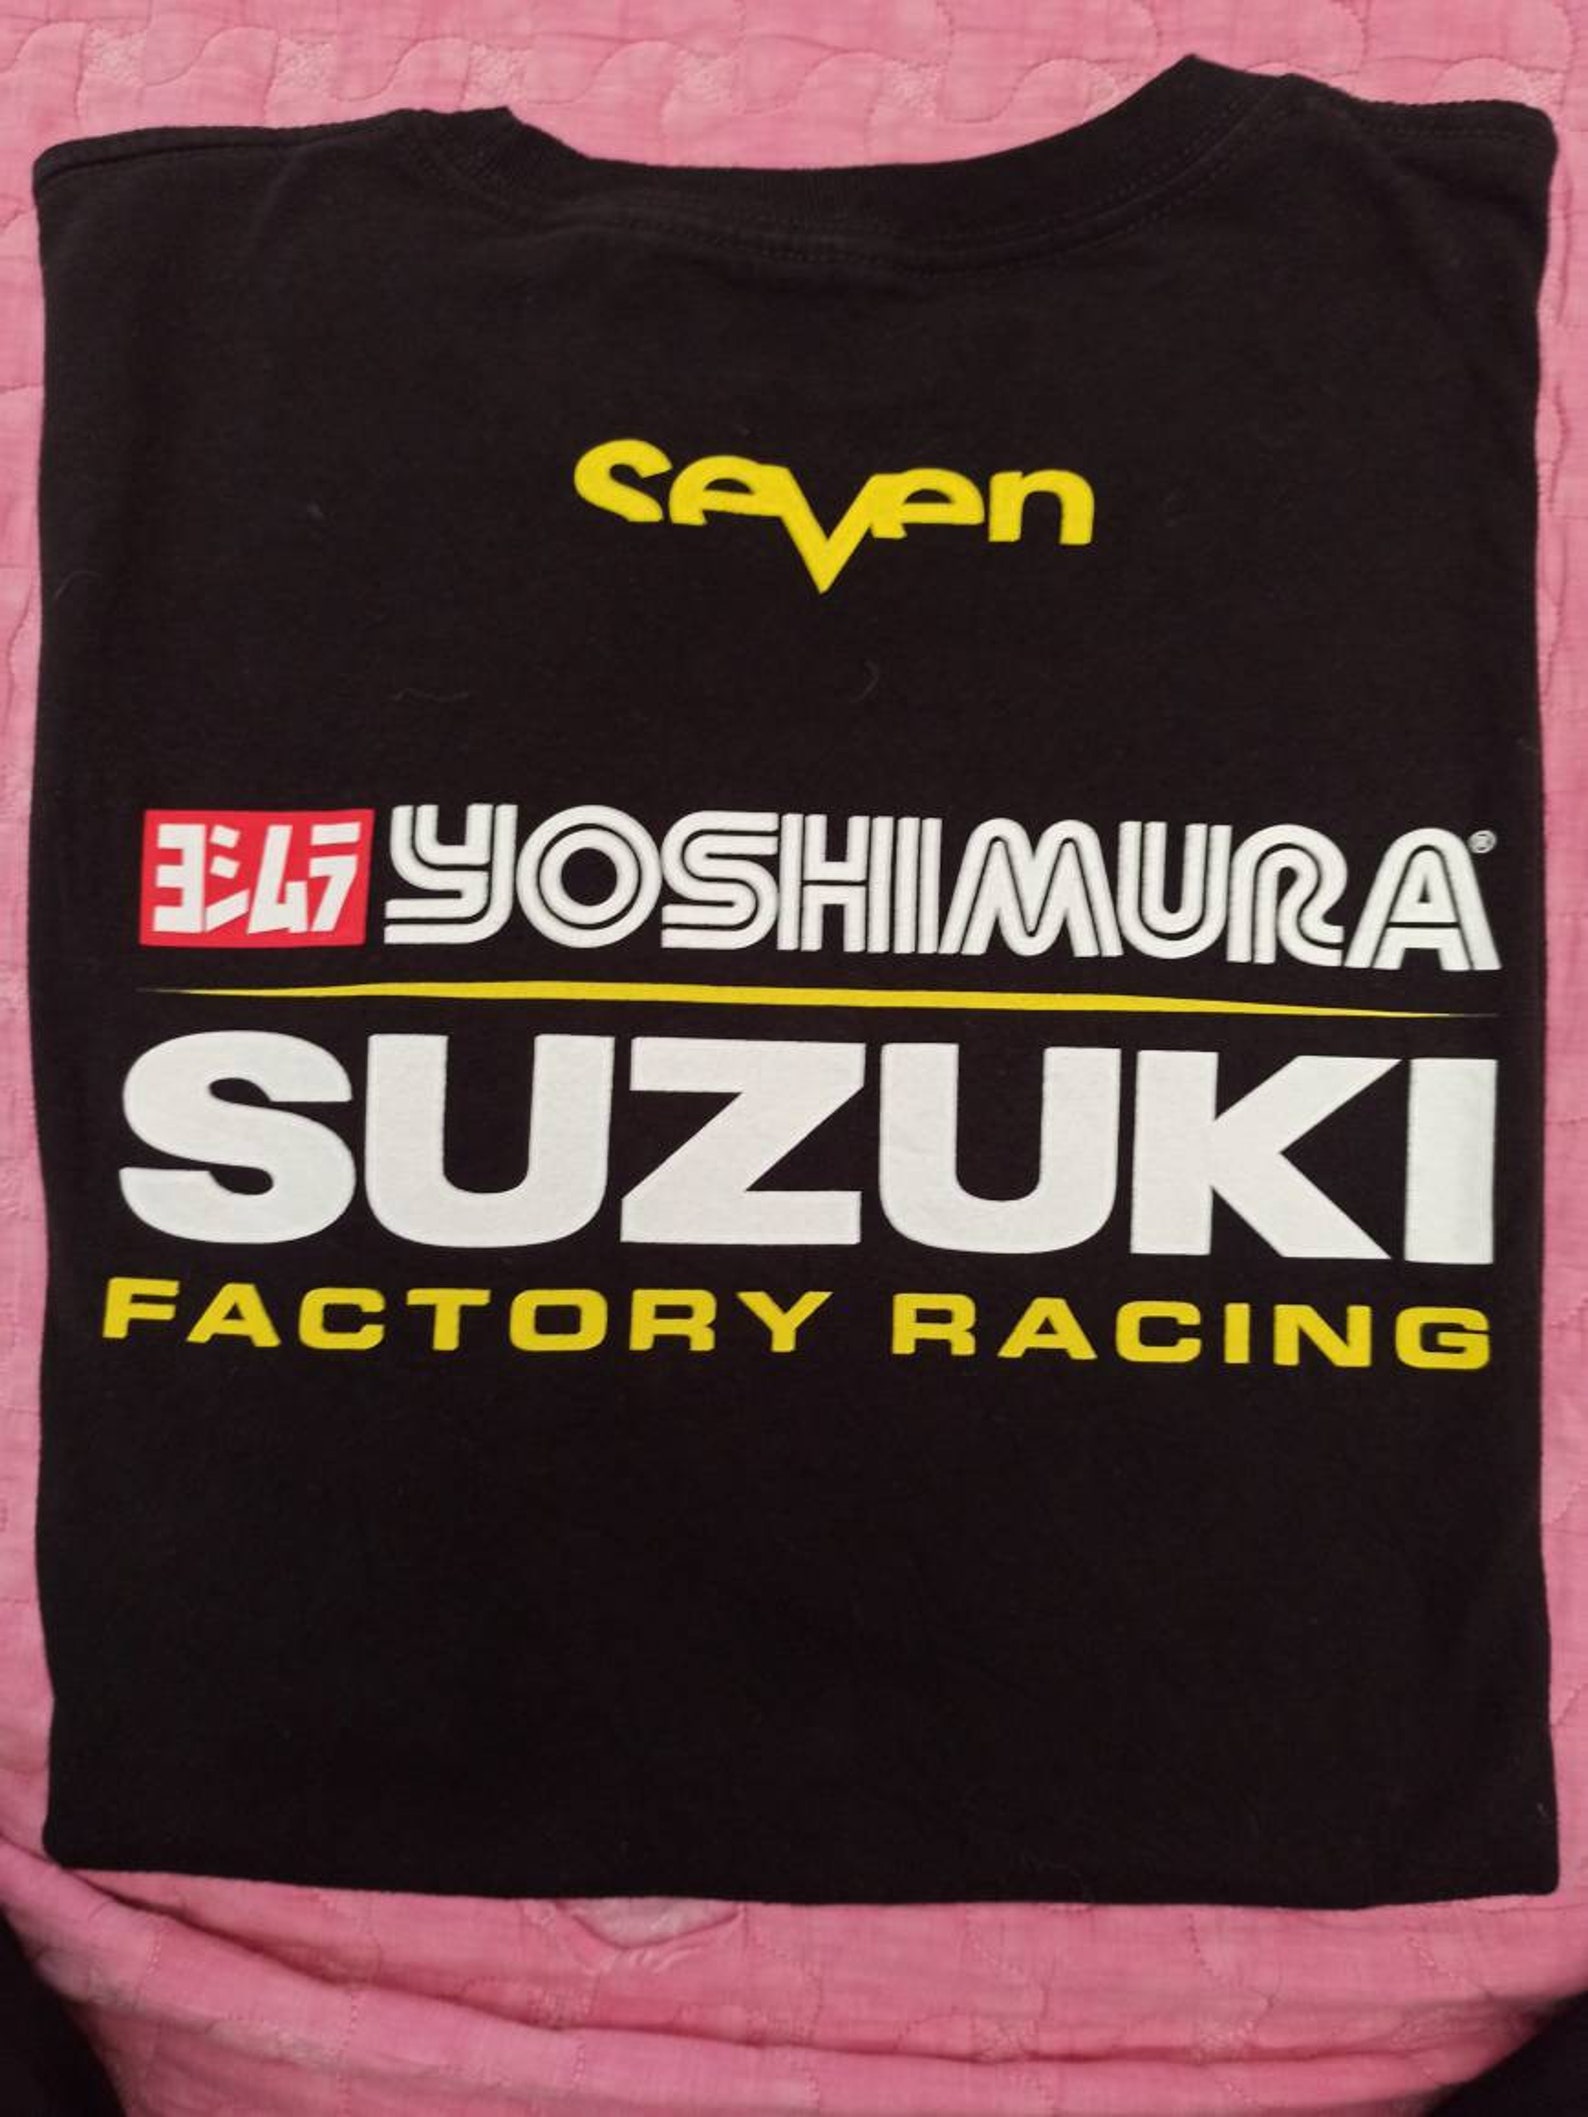 Authentic seven yoshimura suzuki factory racing shirt | Etsy